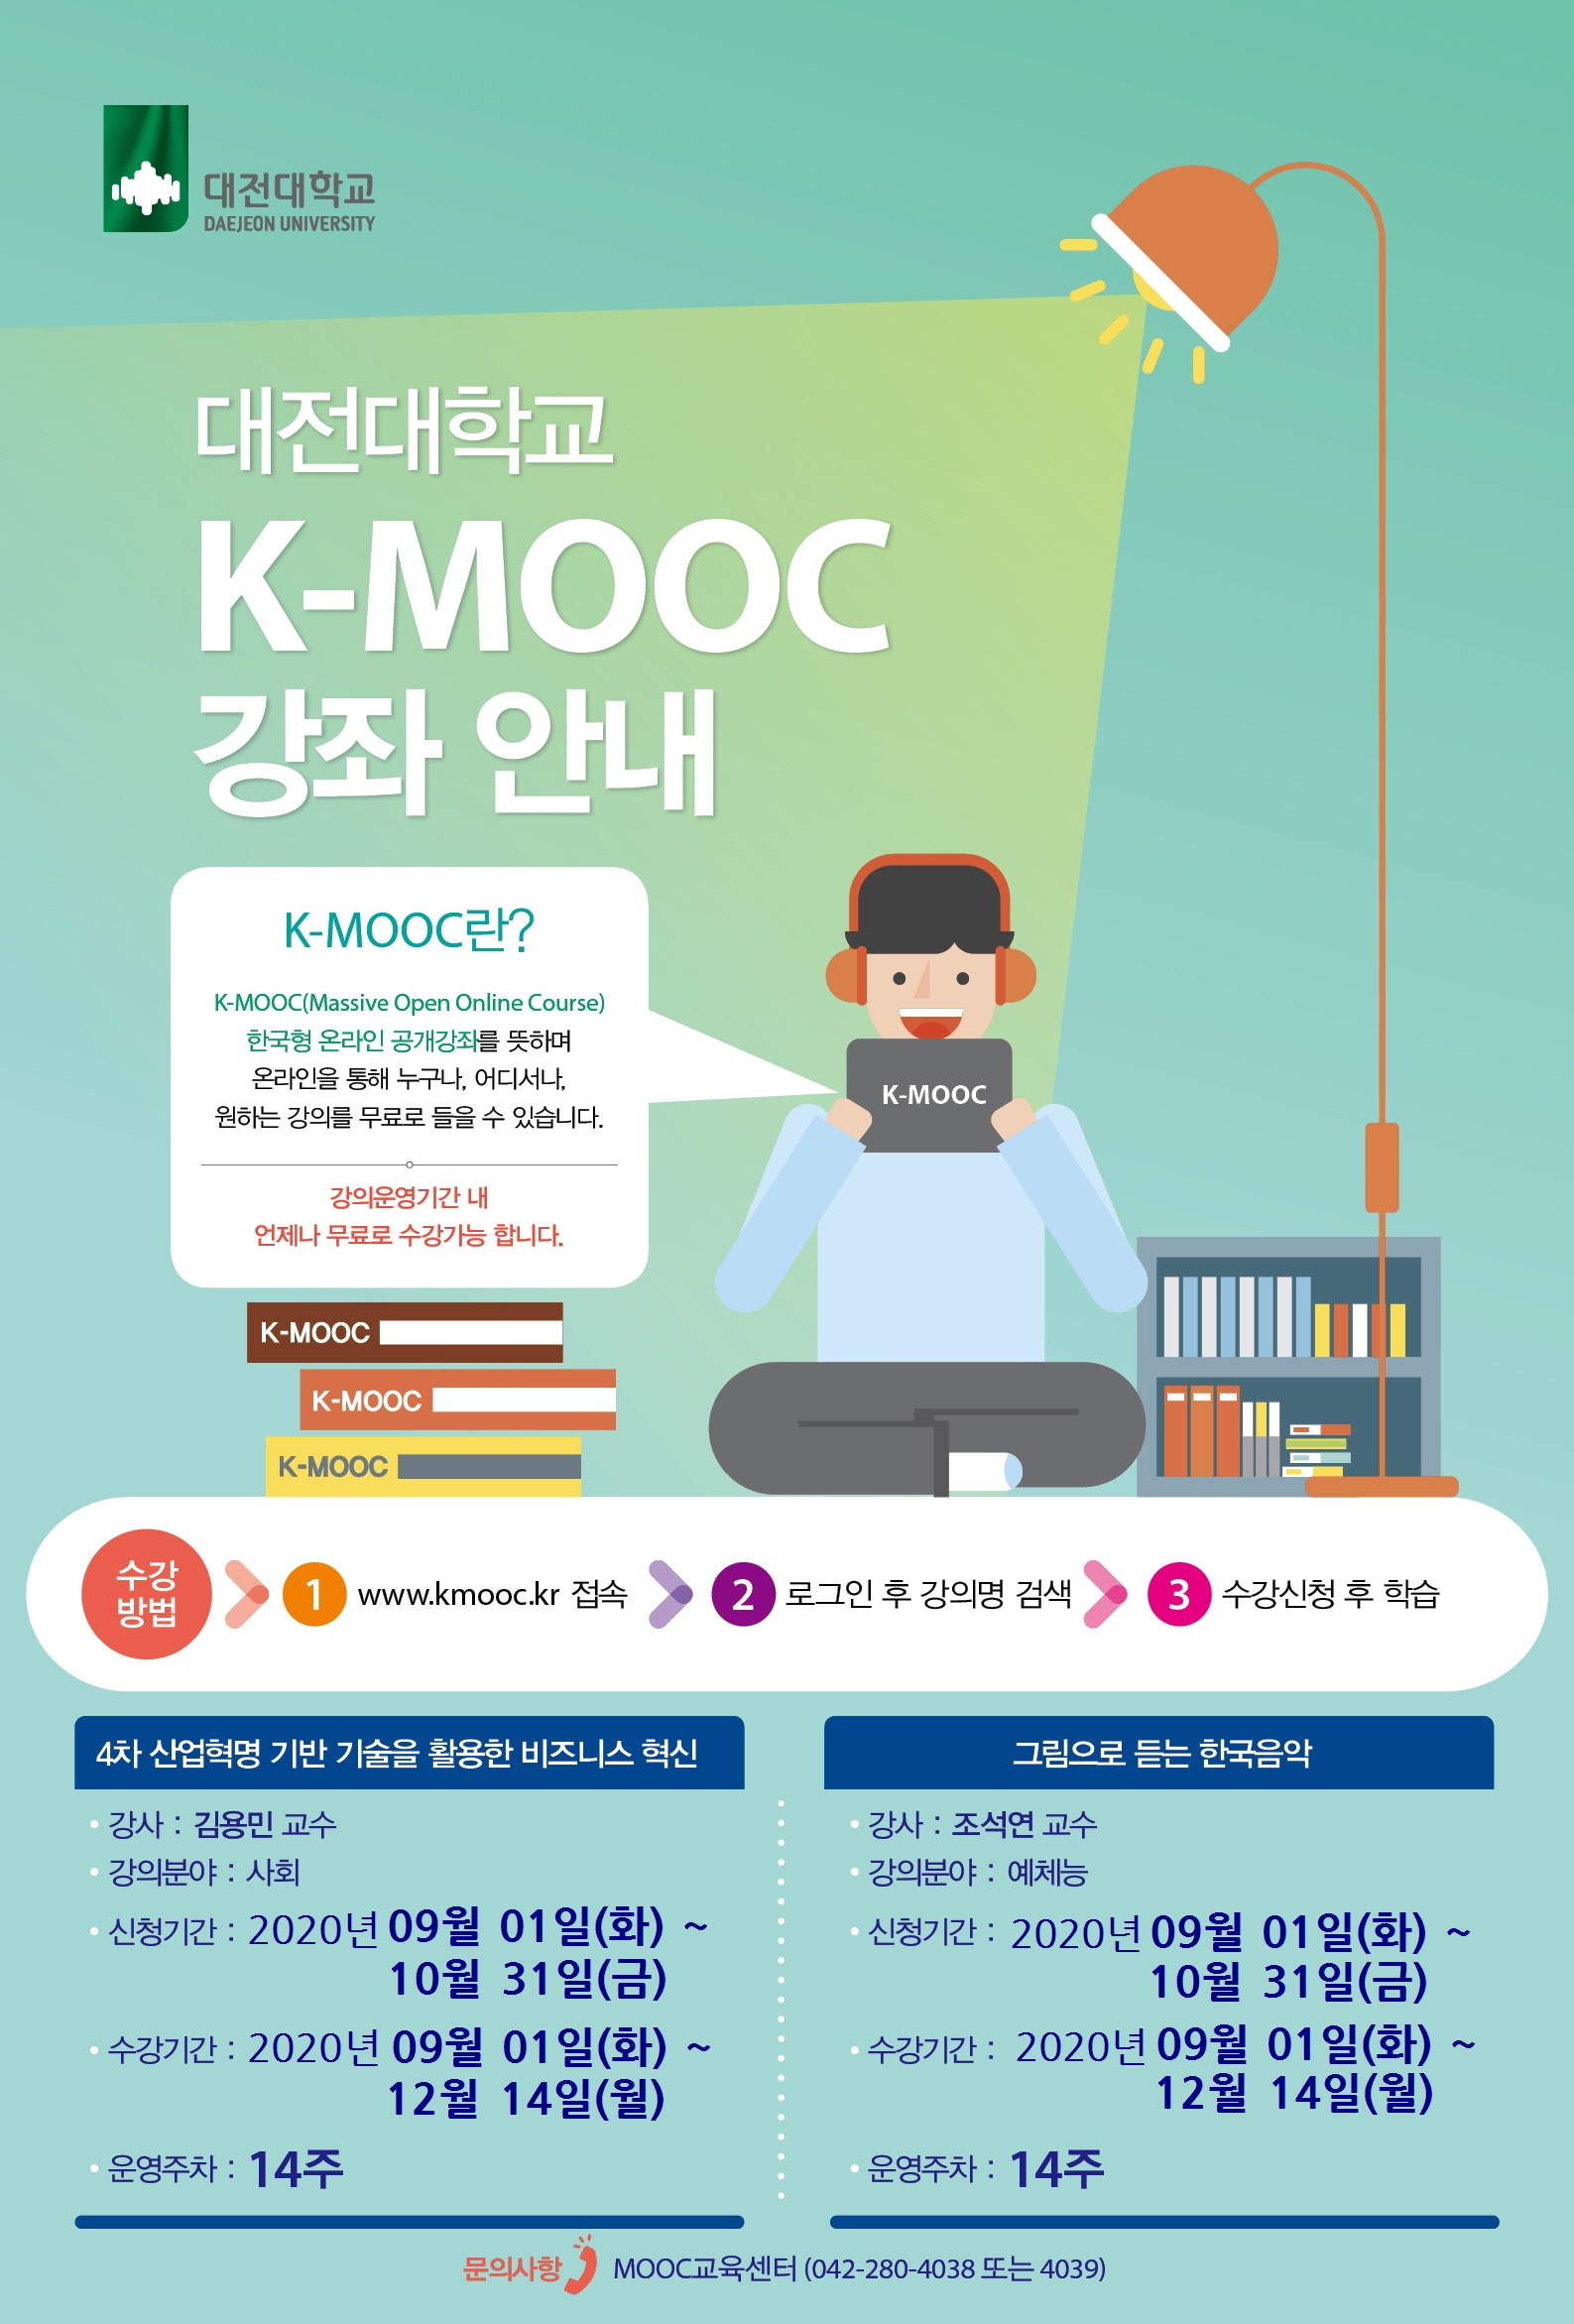 б K-MOOC  ȳ